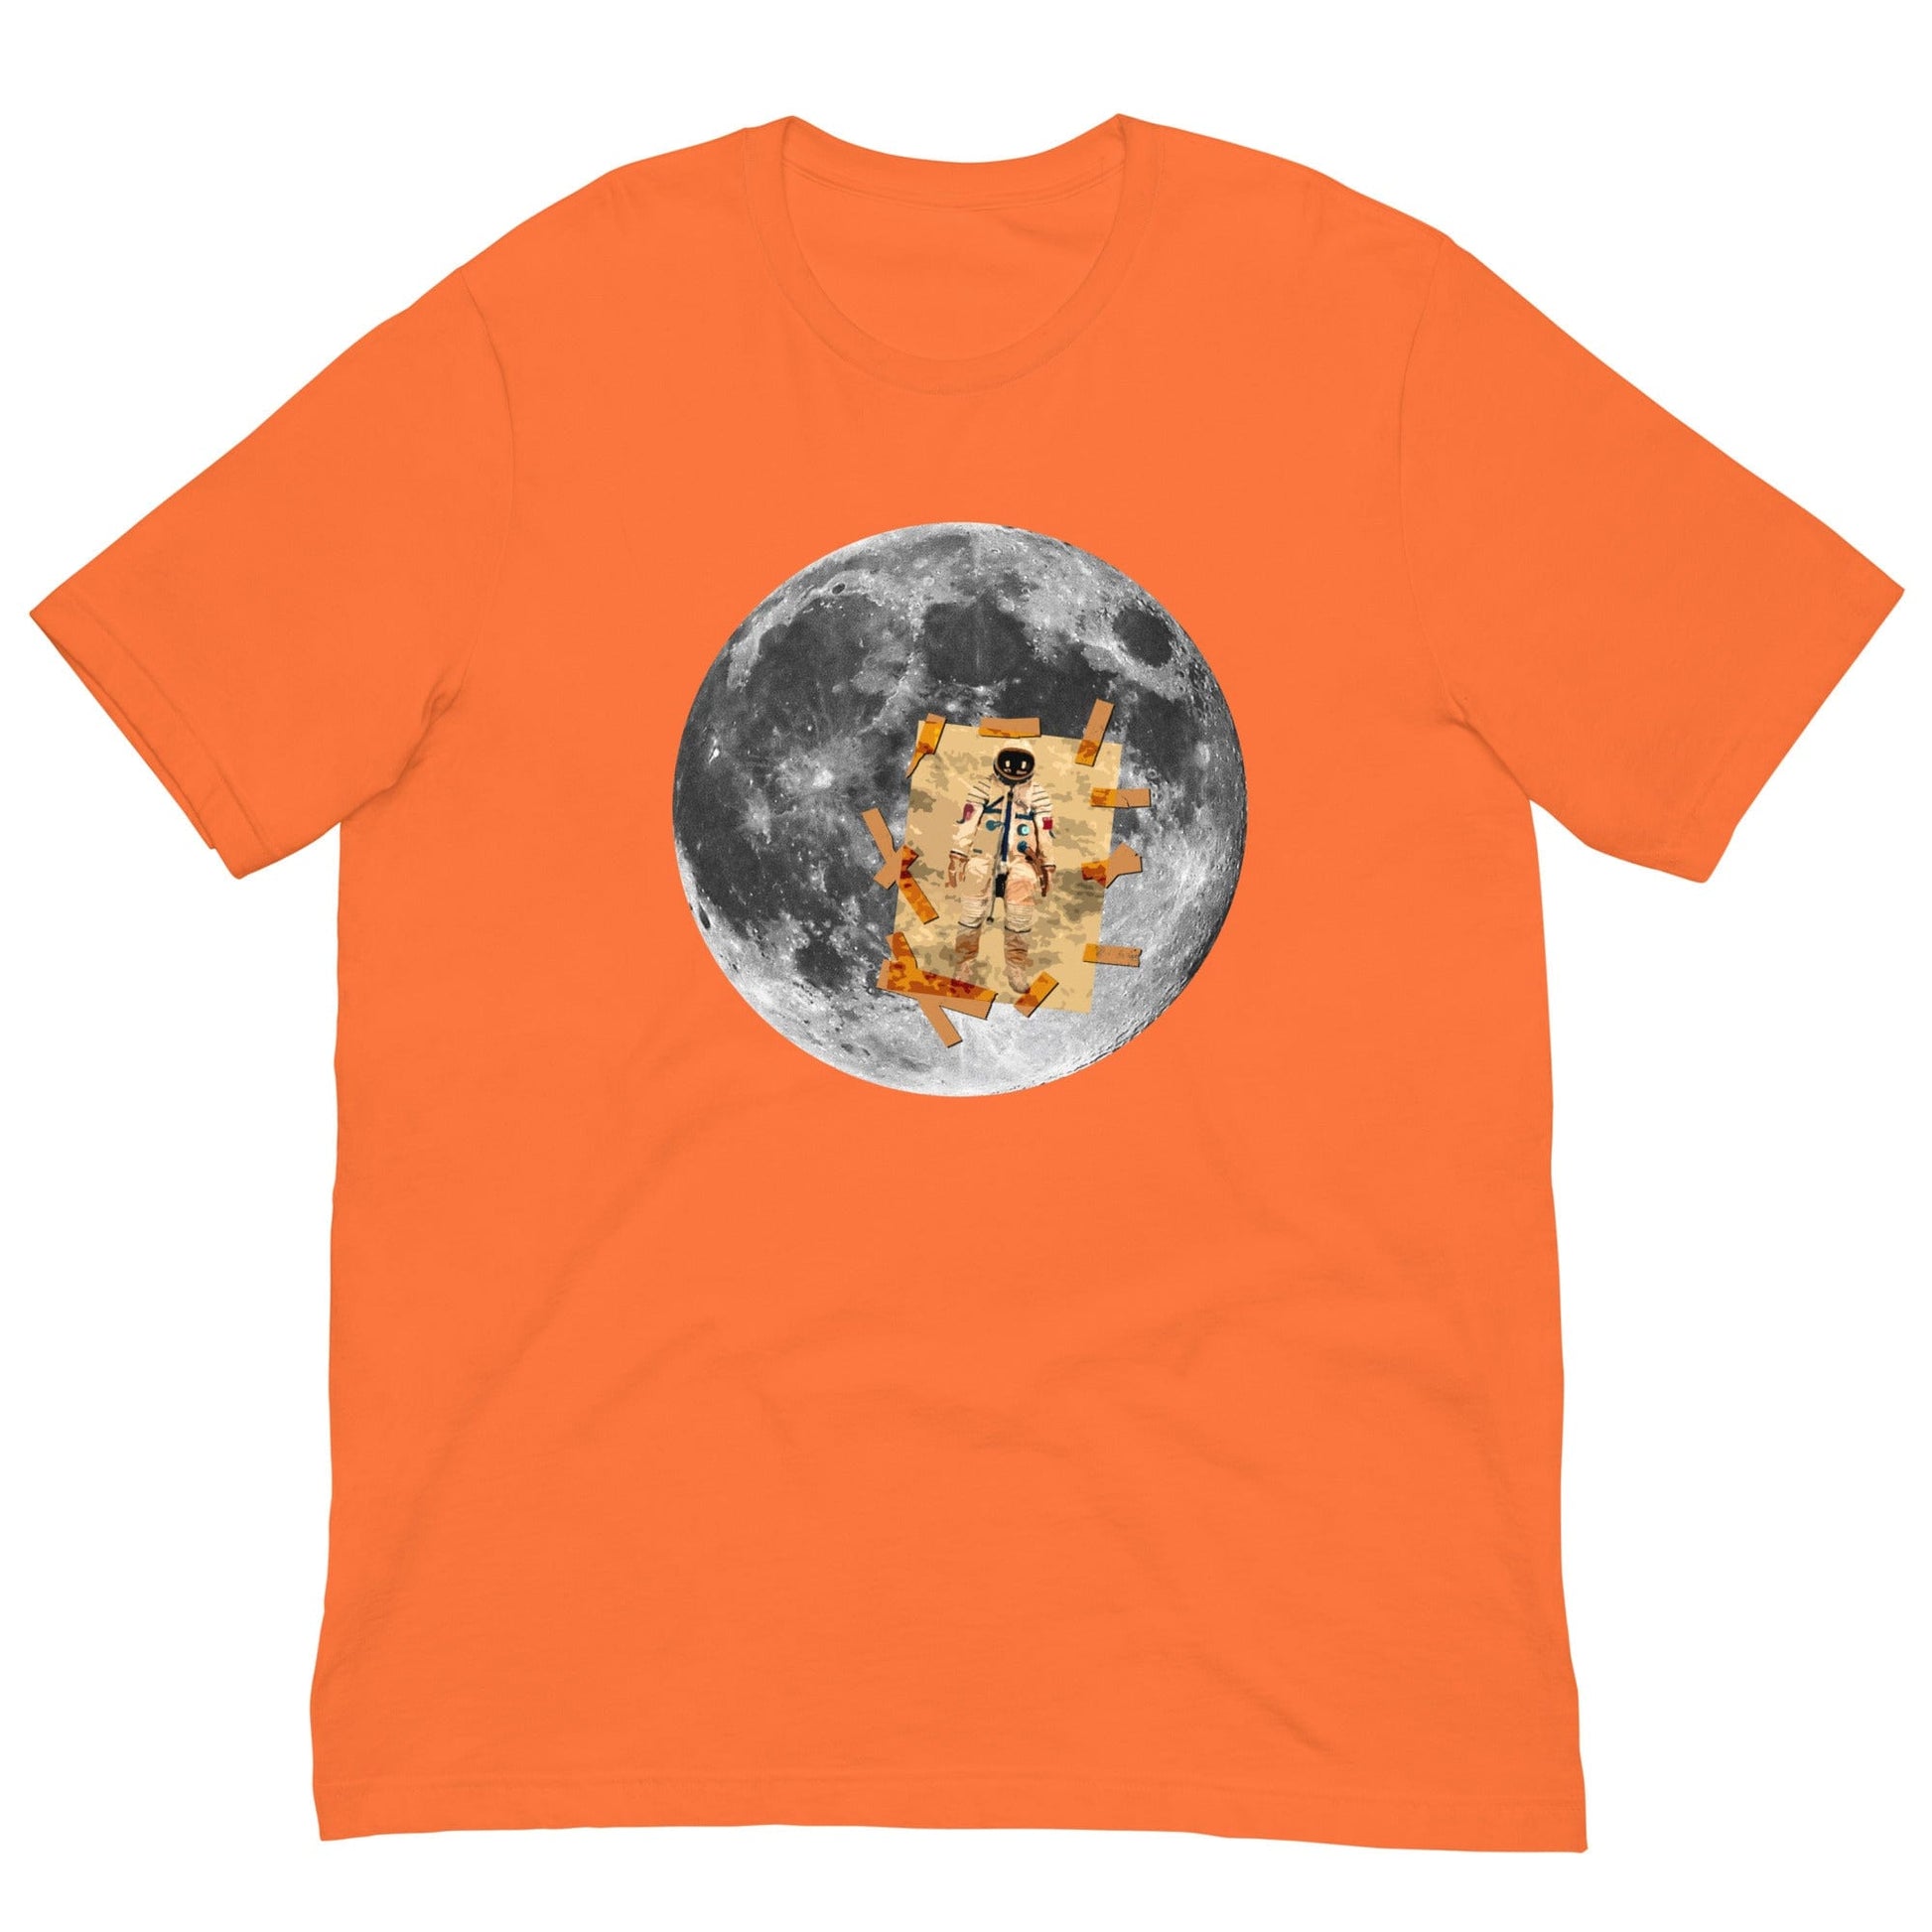 Man on the Moon T-shirt Orange / XS